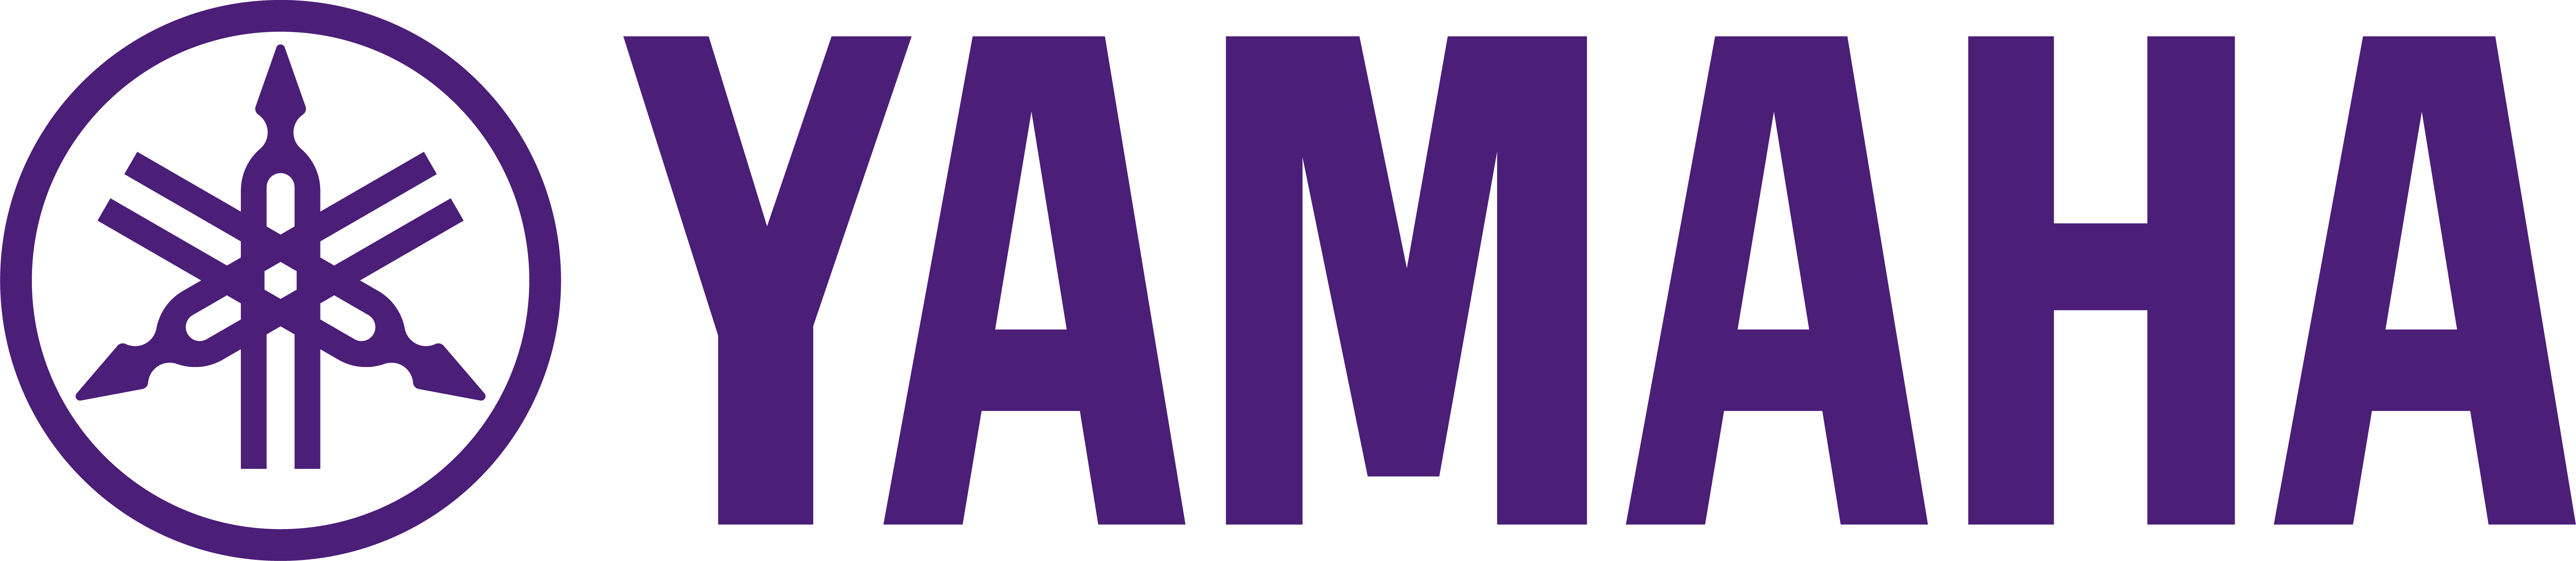 Yamaha Corporation Logo